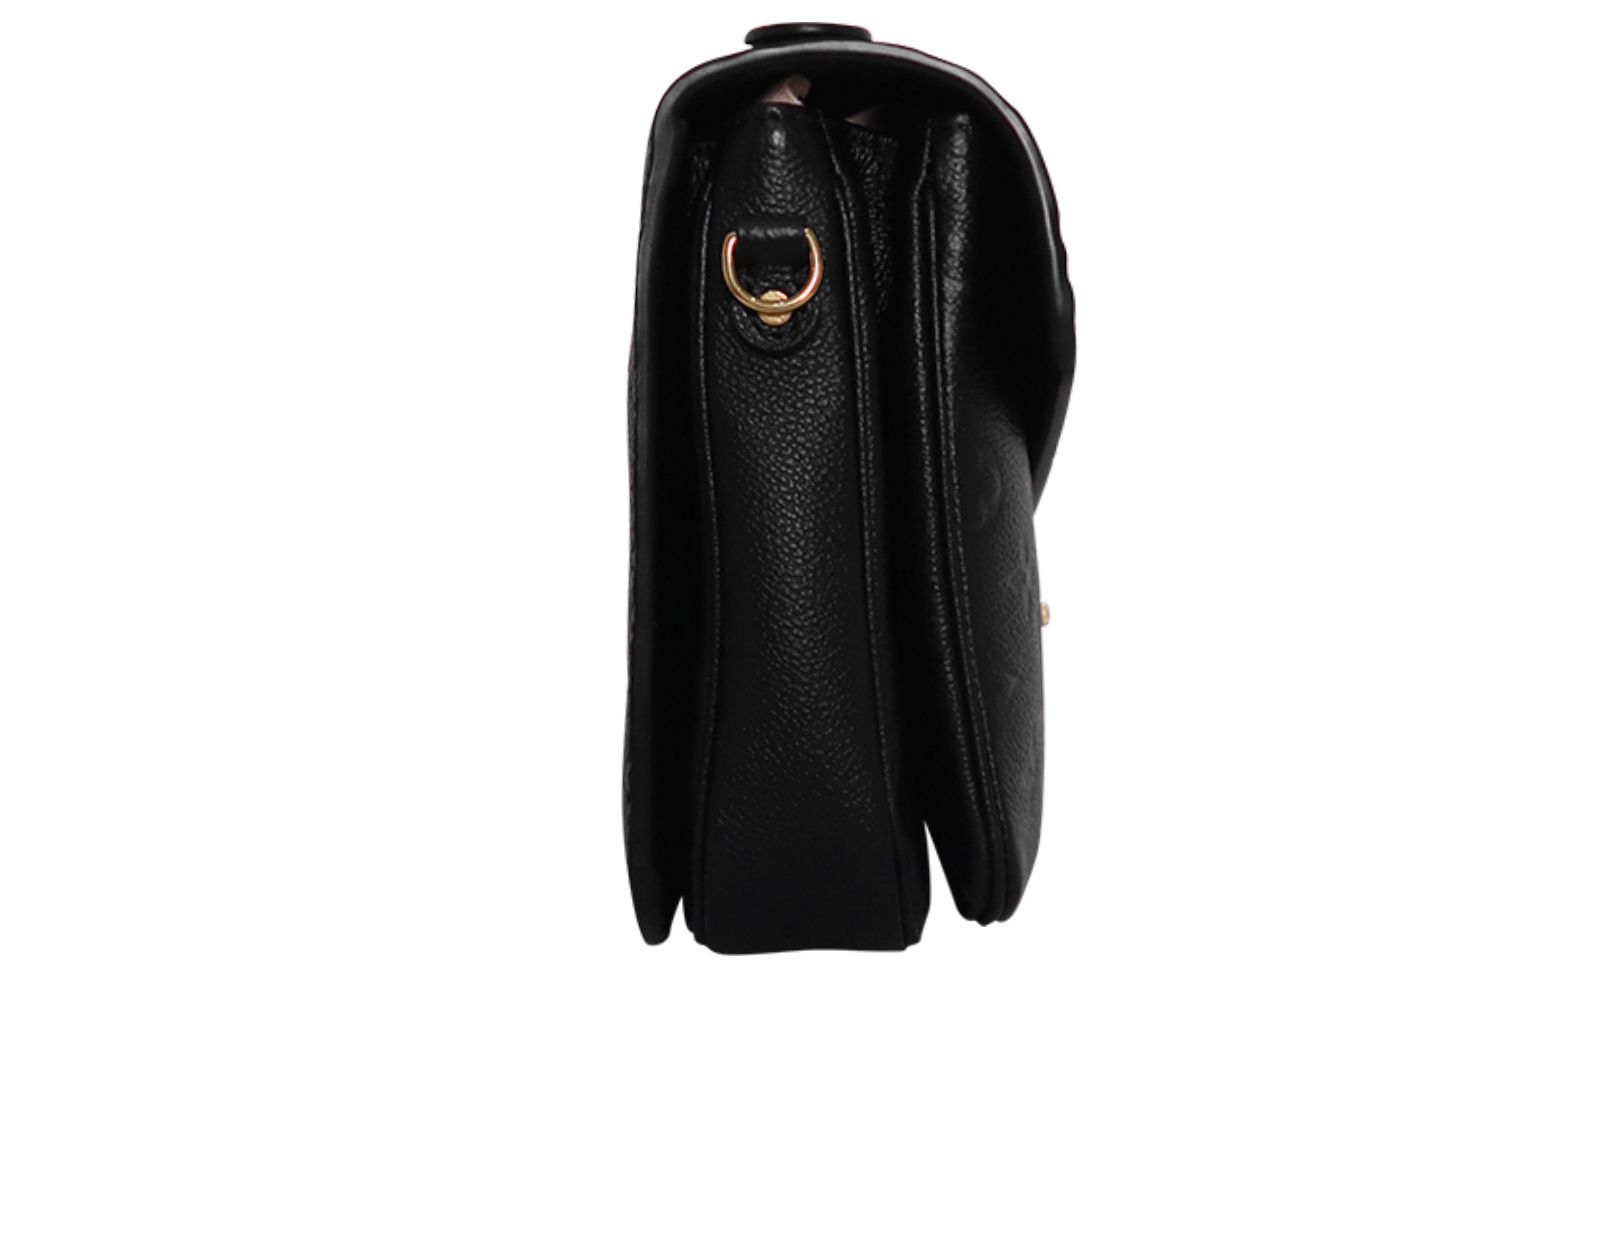 Louis Vuitton Pochette Metis Small Handbag #L3188 – TasBatam168